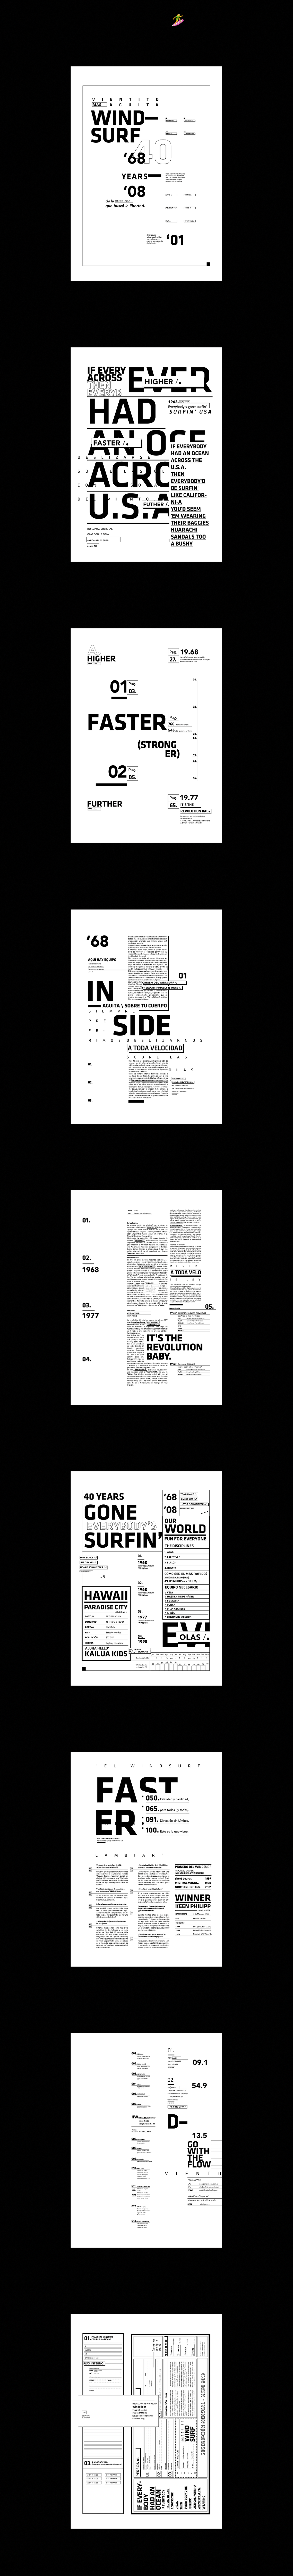 editorial longinotti typografia